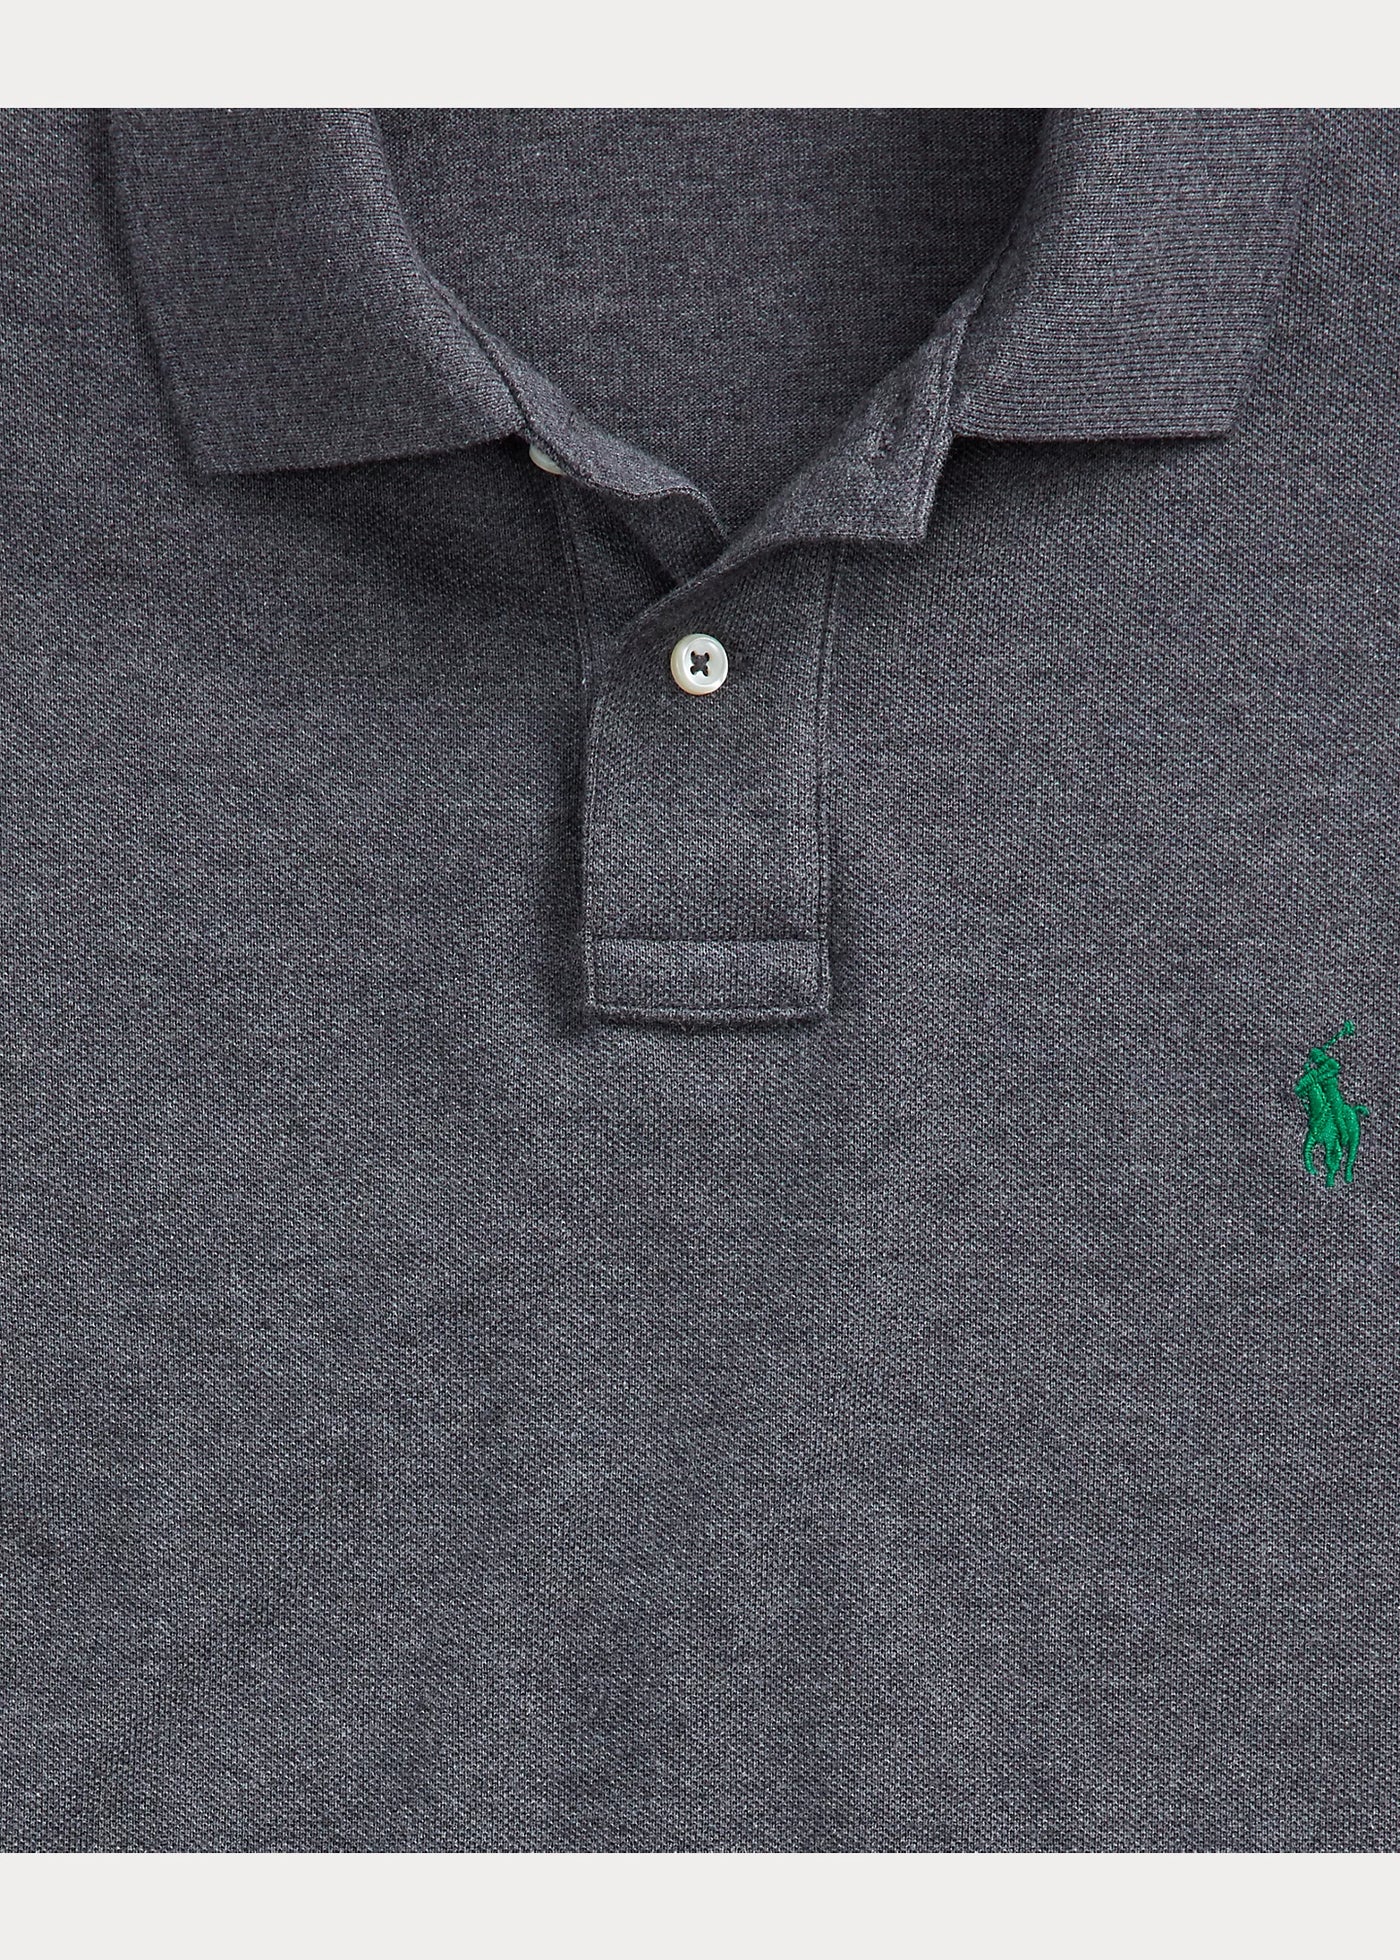 Ralph Lauren The Iconic Mesh Polo Shirt | Barclay Heather